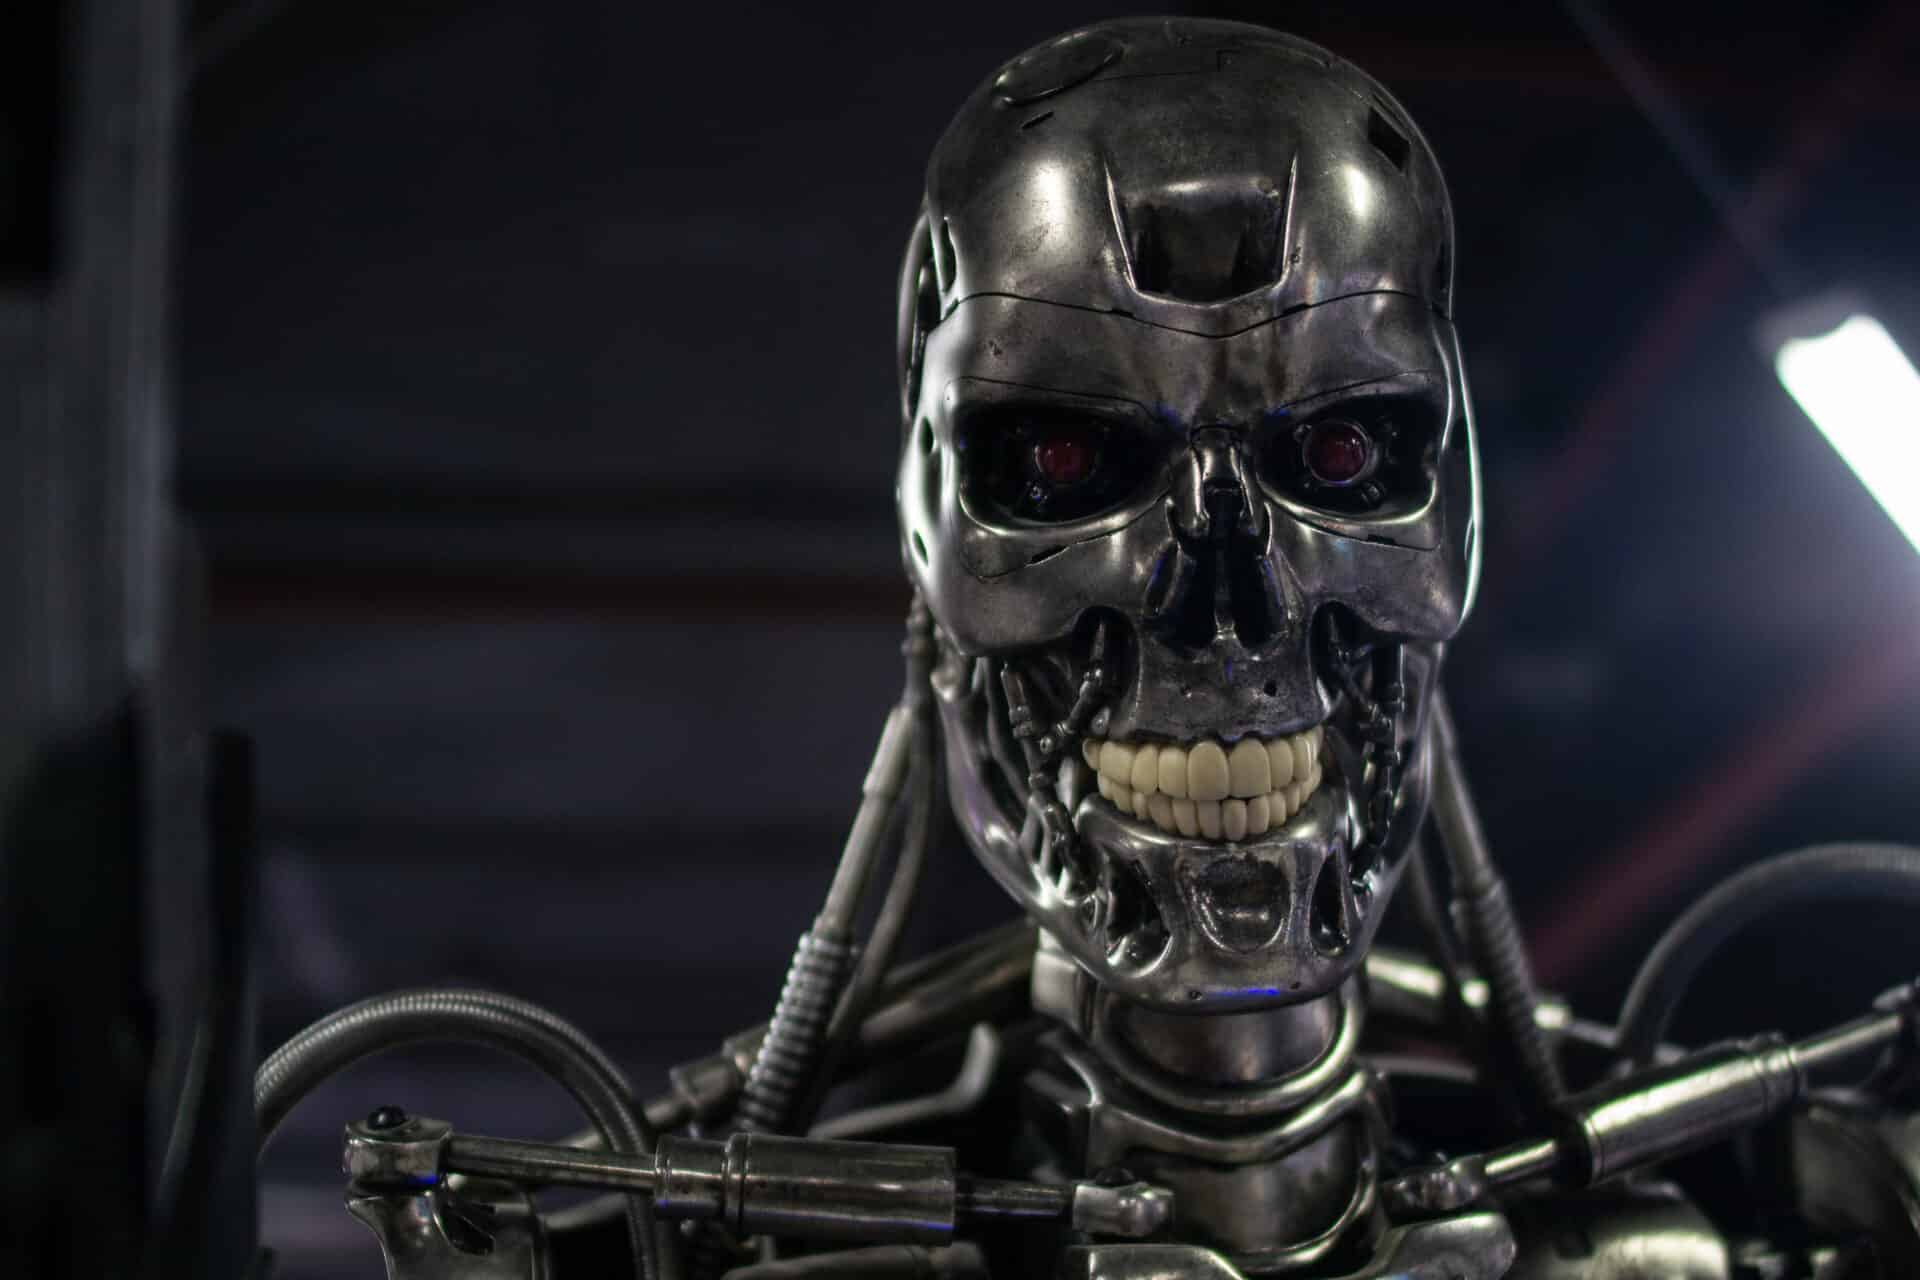 Terminator cyborg skeleton